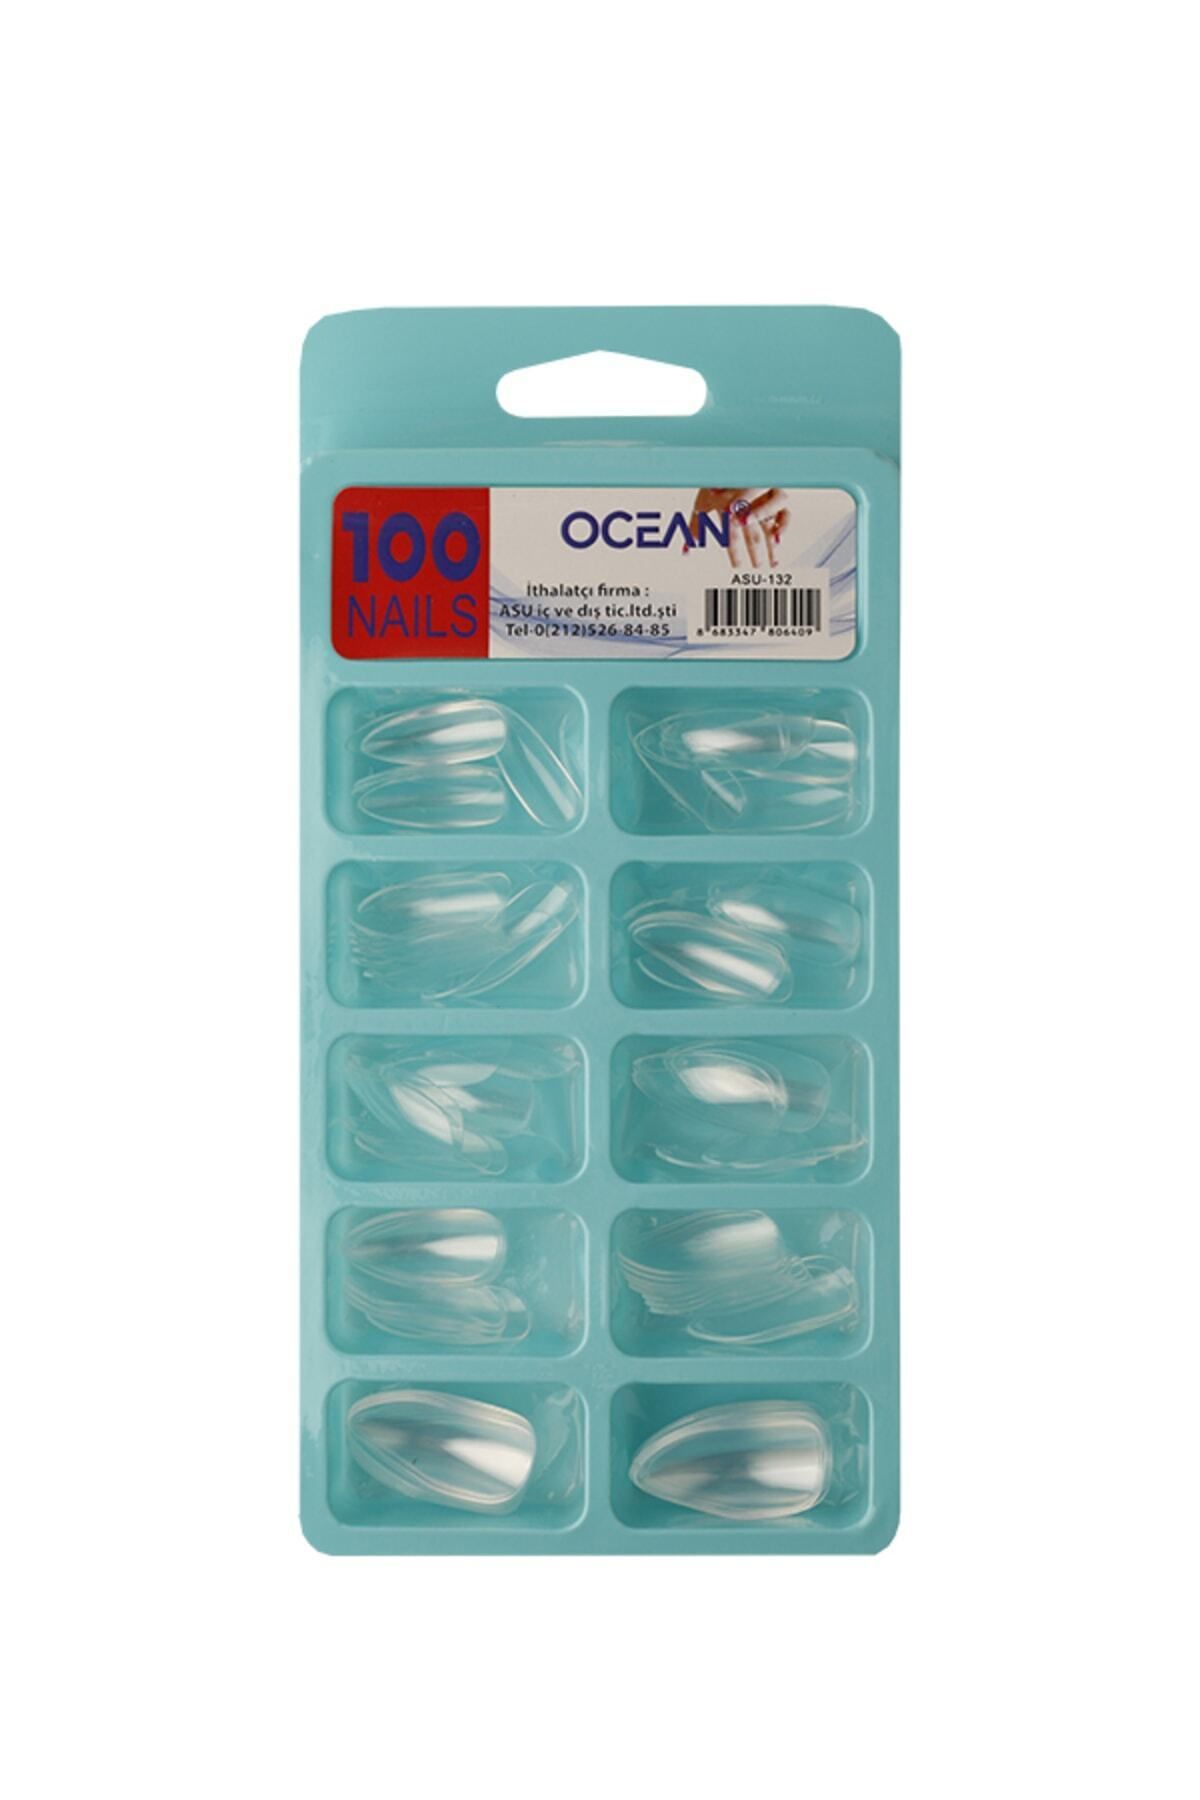 Ocean پروتز بادامی با جعبه 100 132 نیکل